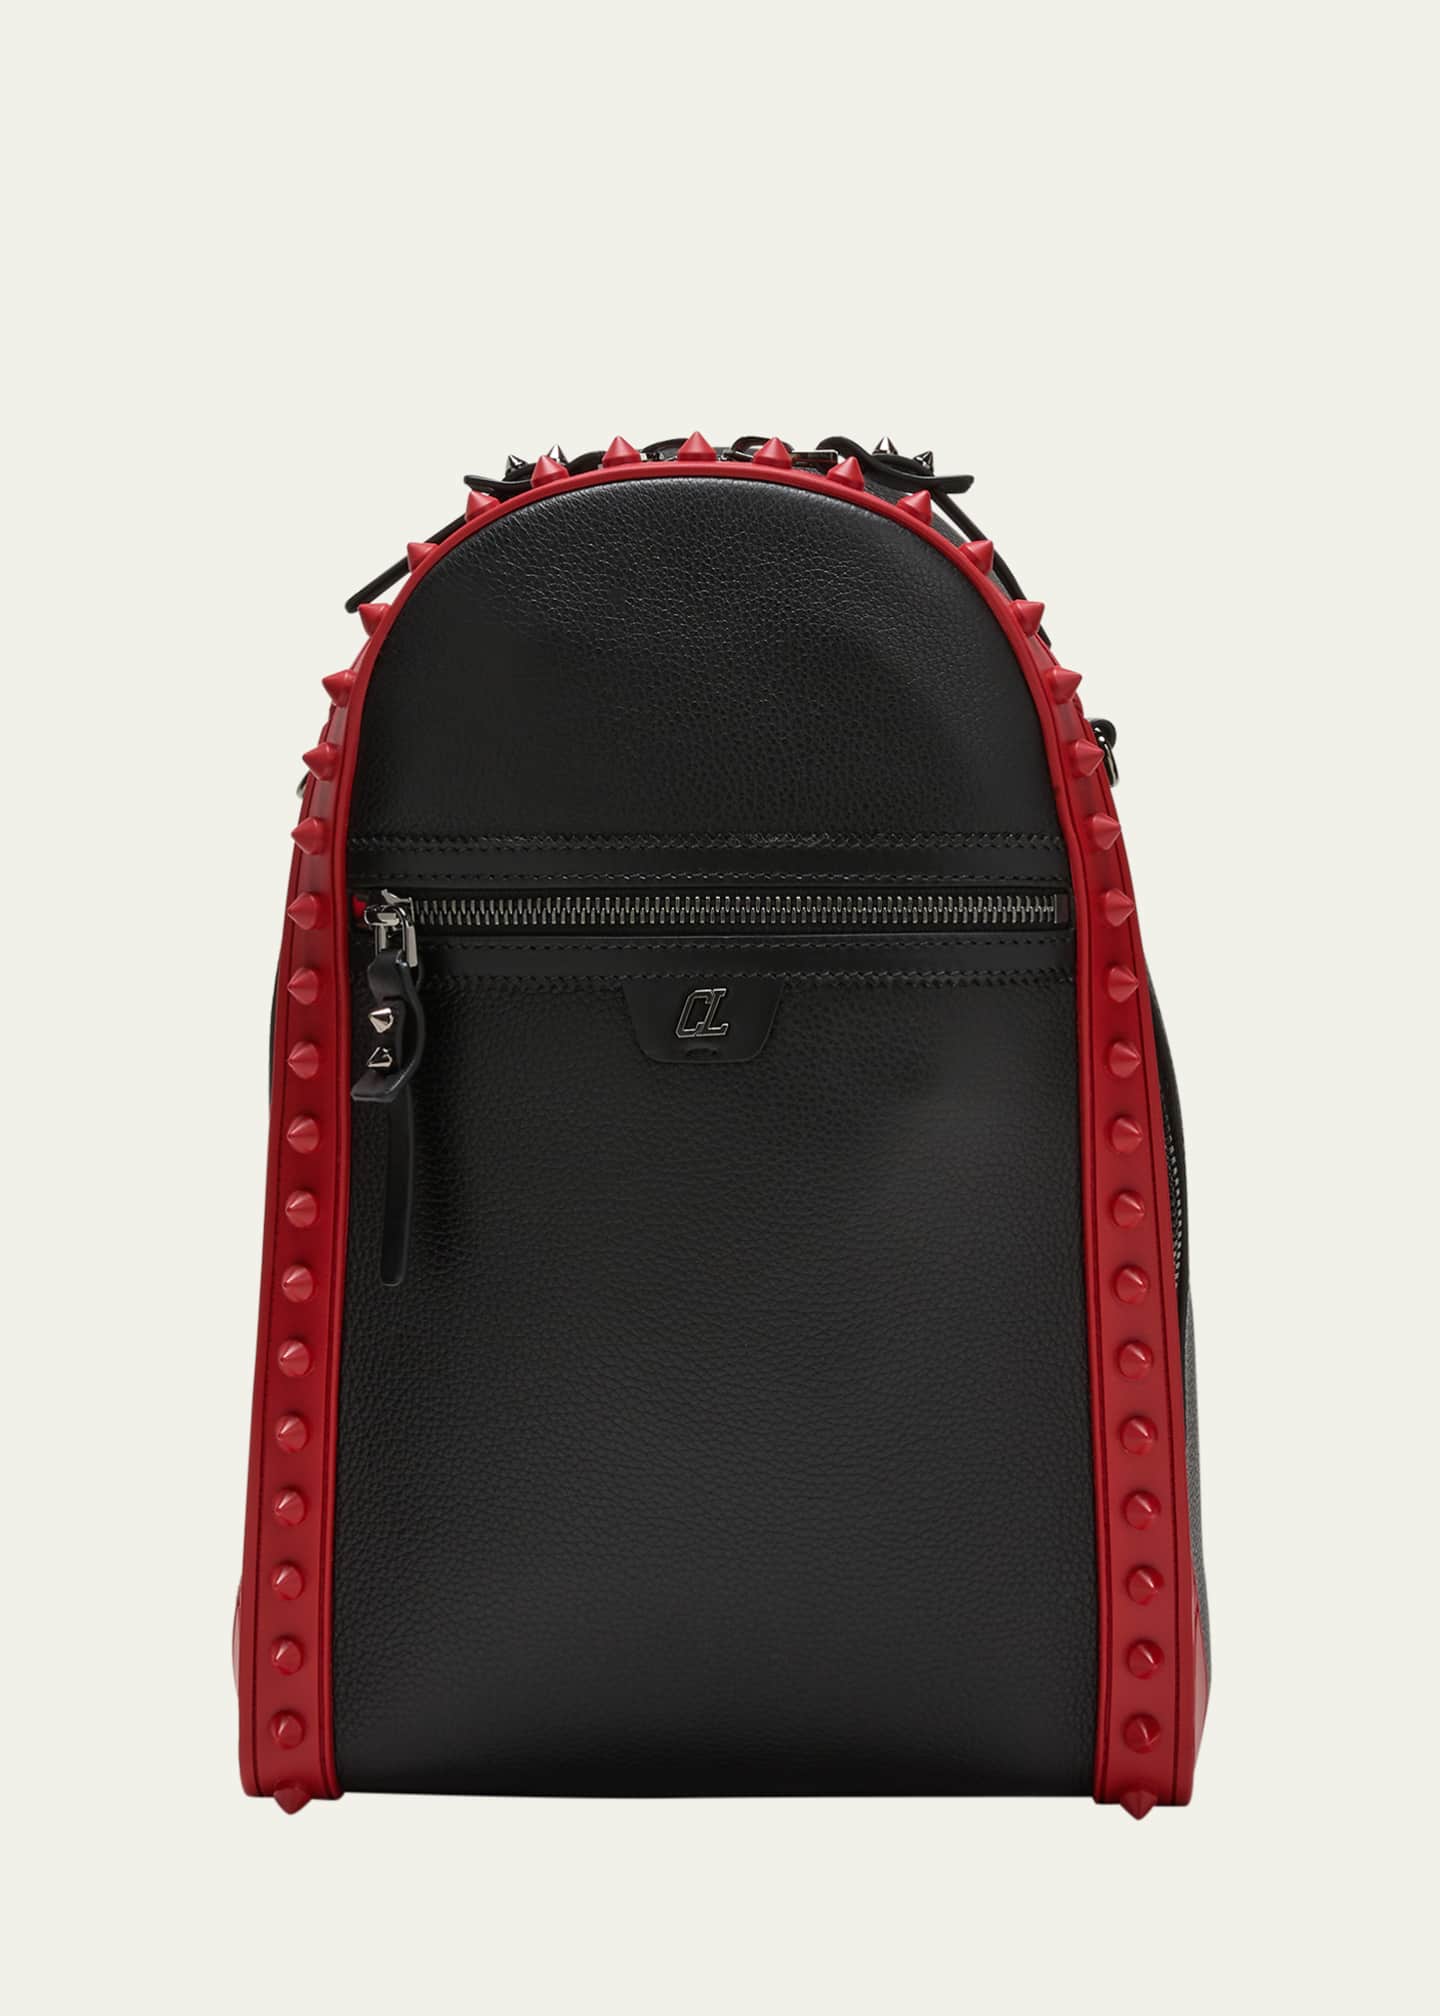 Christian Louboutin Men's Leather Backpack - Bergdorf Goodman